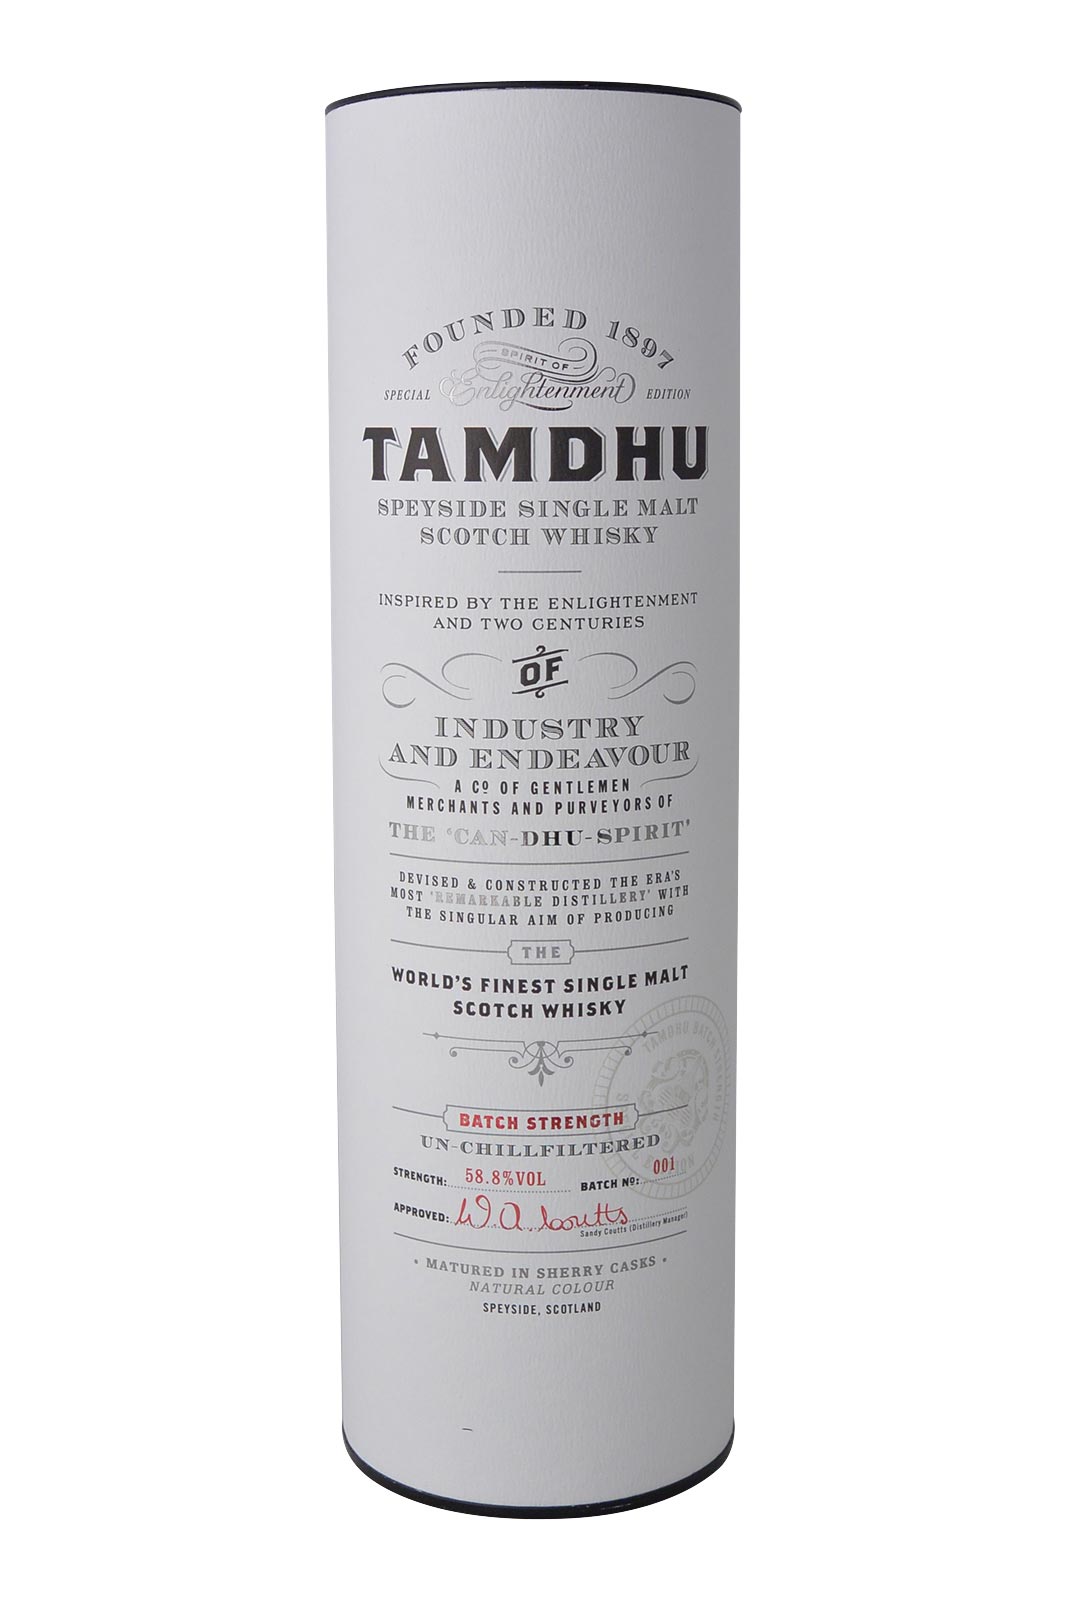 Tamdhu Special Enlightenment Edition